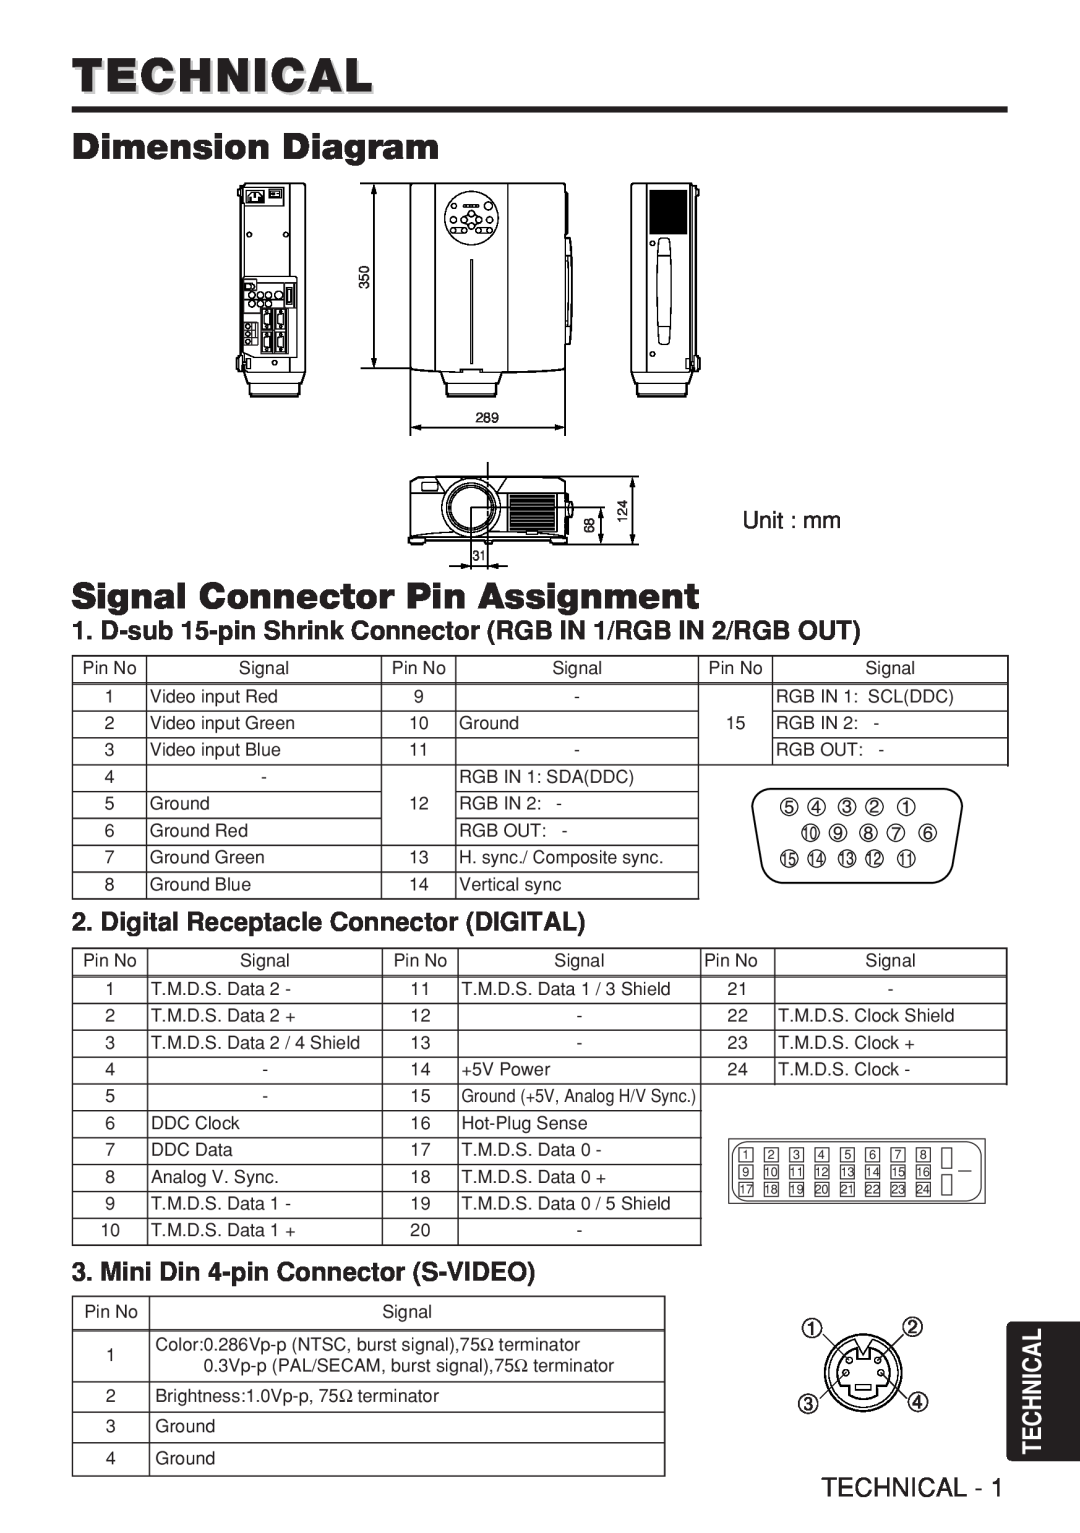 Hitachi CP-X985W Technical, Dimension Diagram, Signal Connector Pin Assignment, Digital Receptacle Connector DIGITAL 